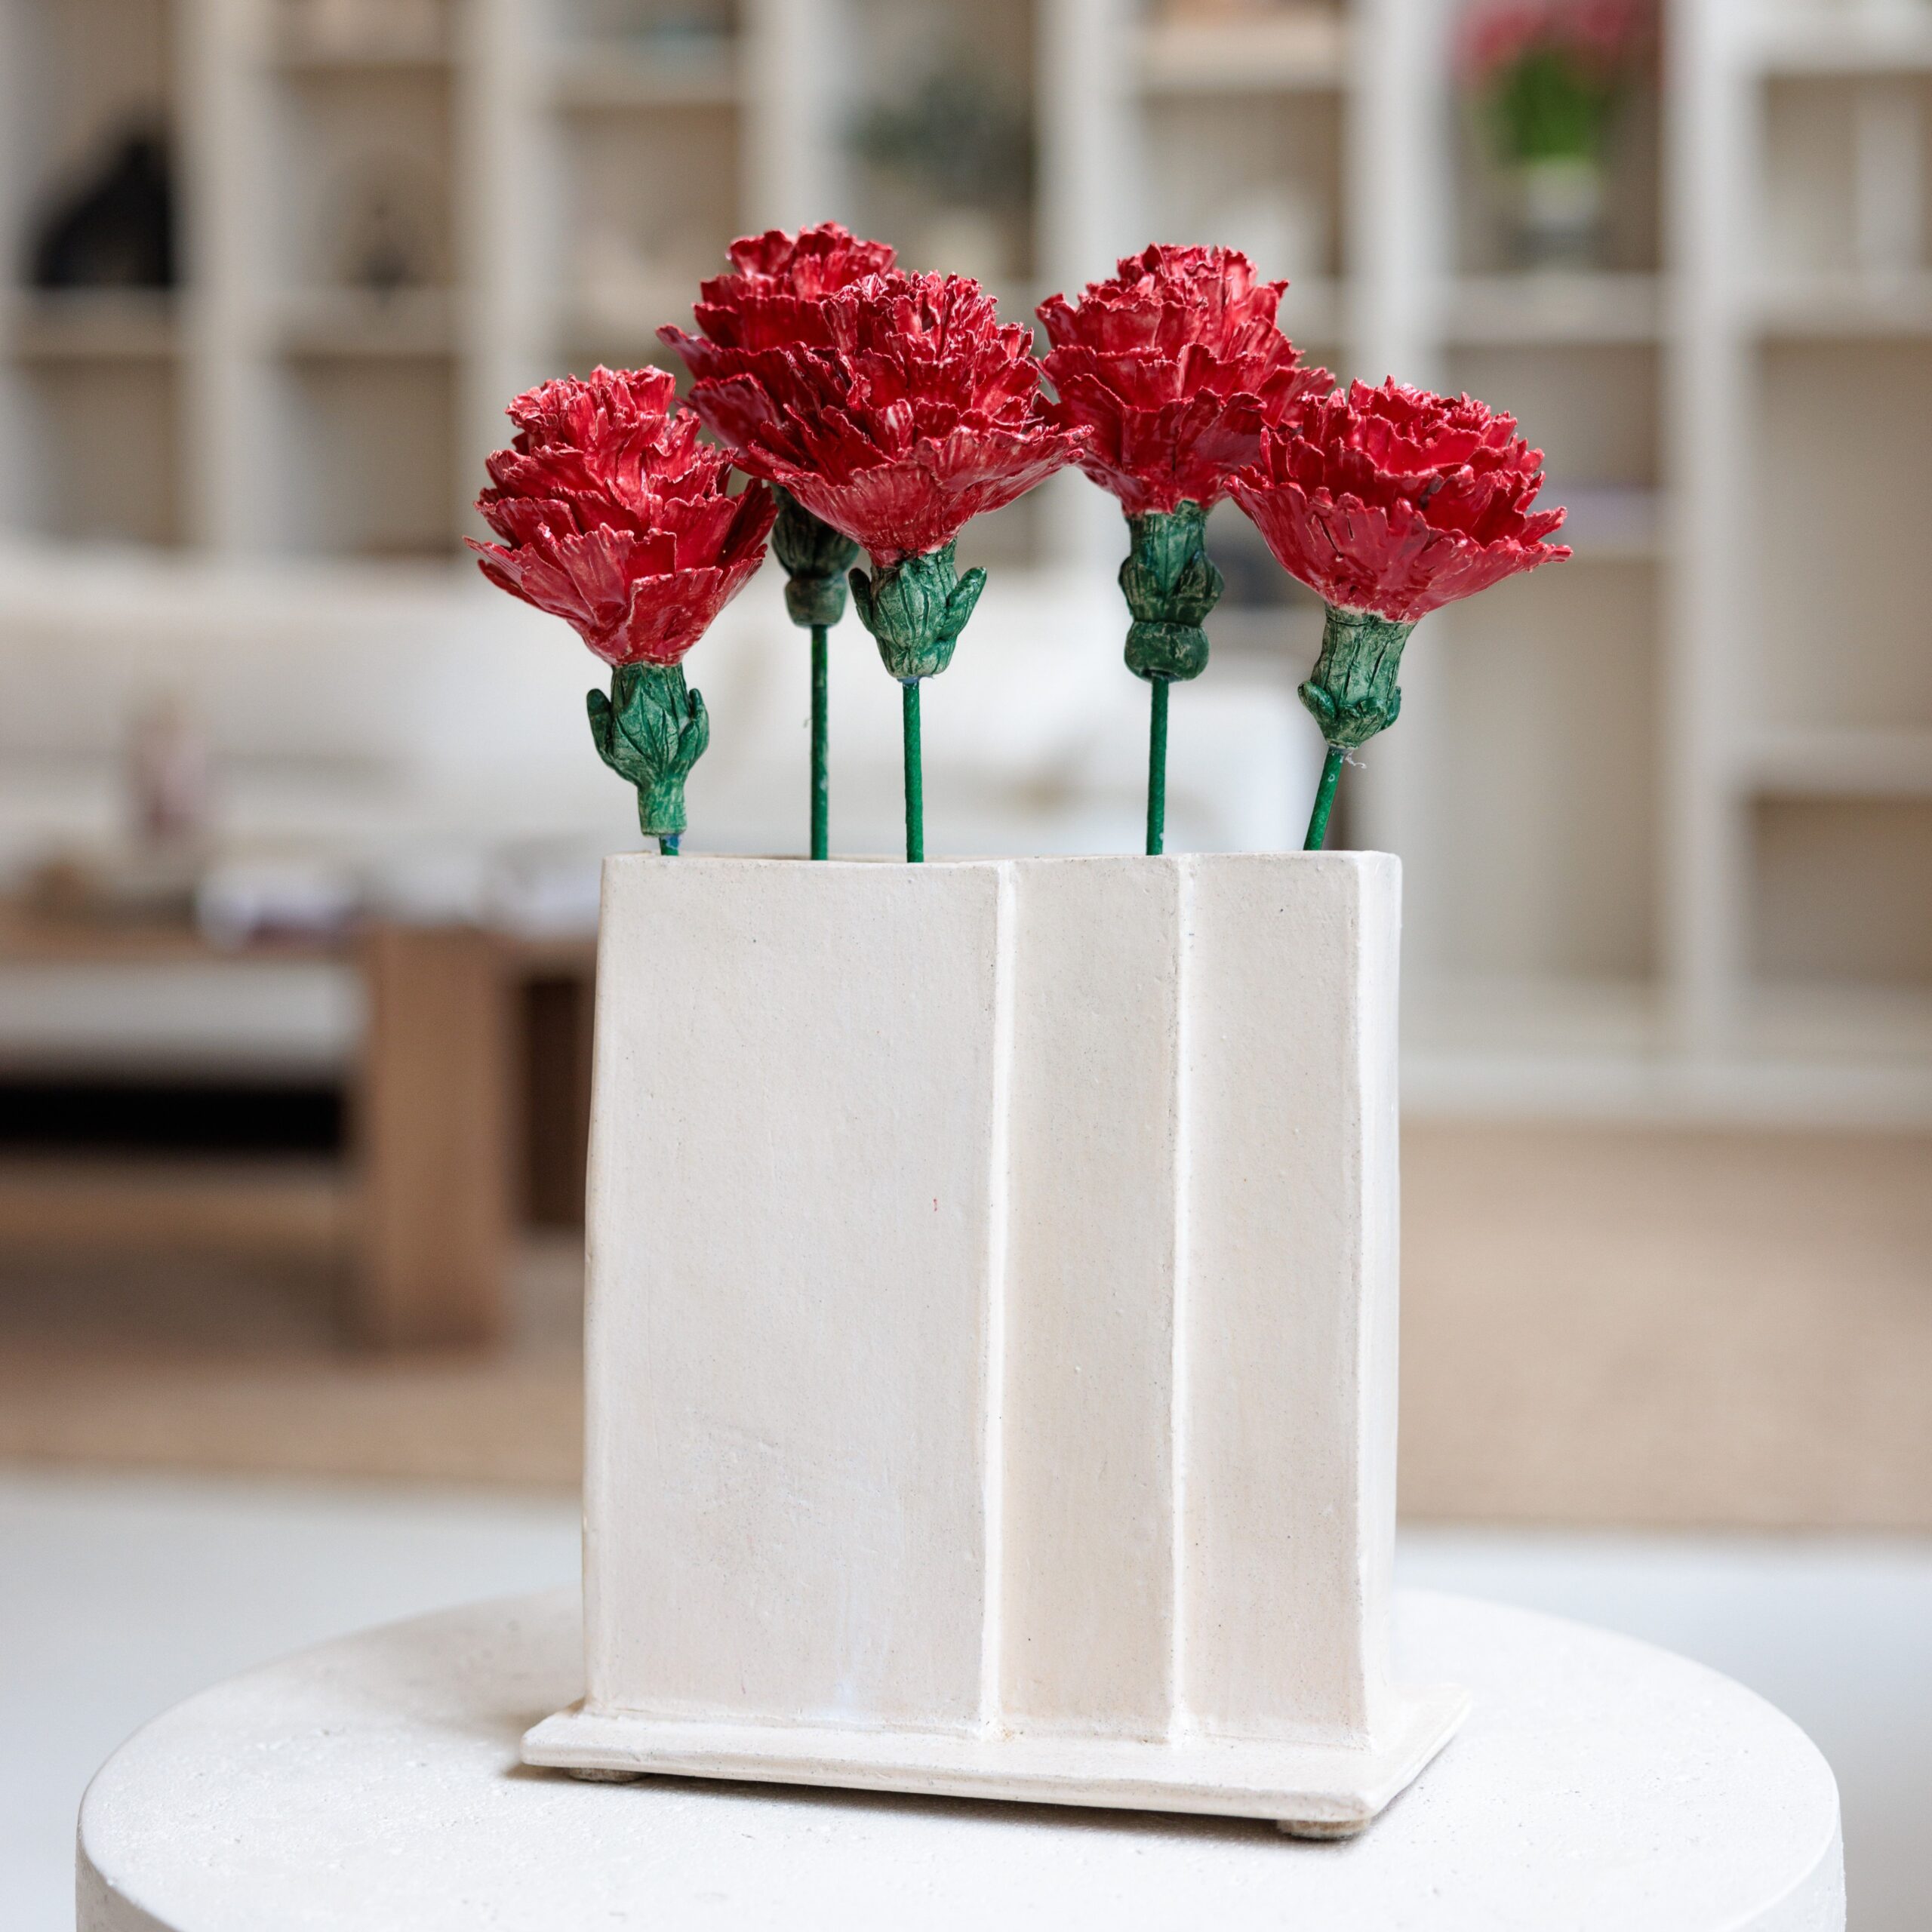 Gerri Orwin: Carnation Sculpture Product Image 1 of 2